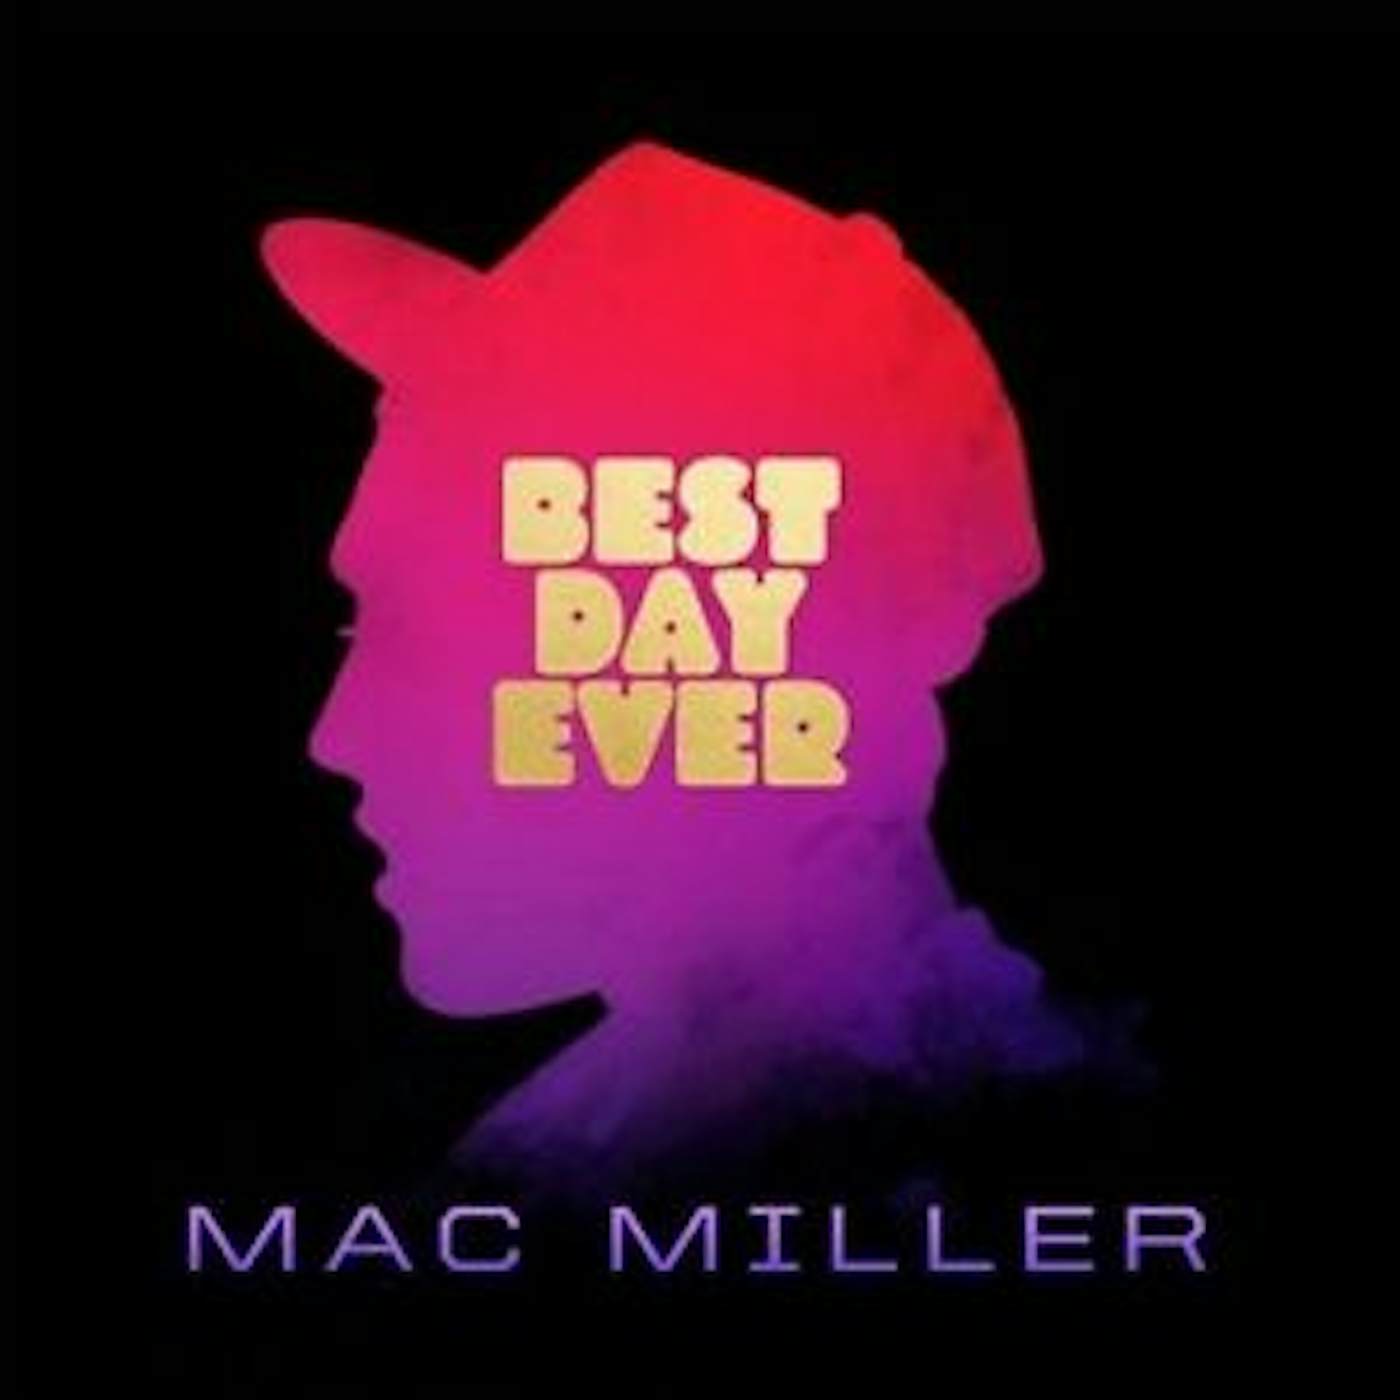 Mac Miller Best Day Ever Vinyl Record